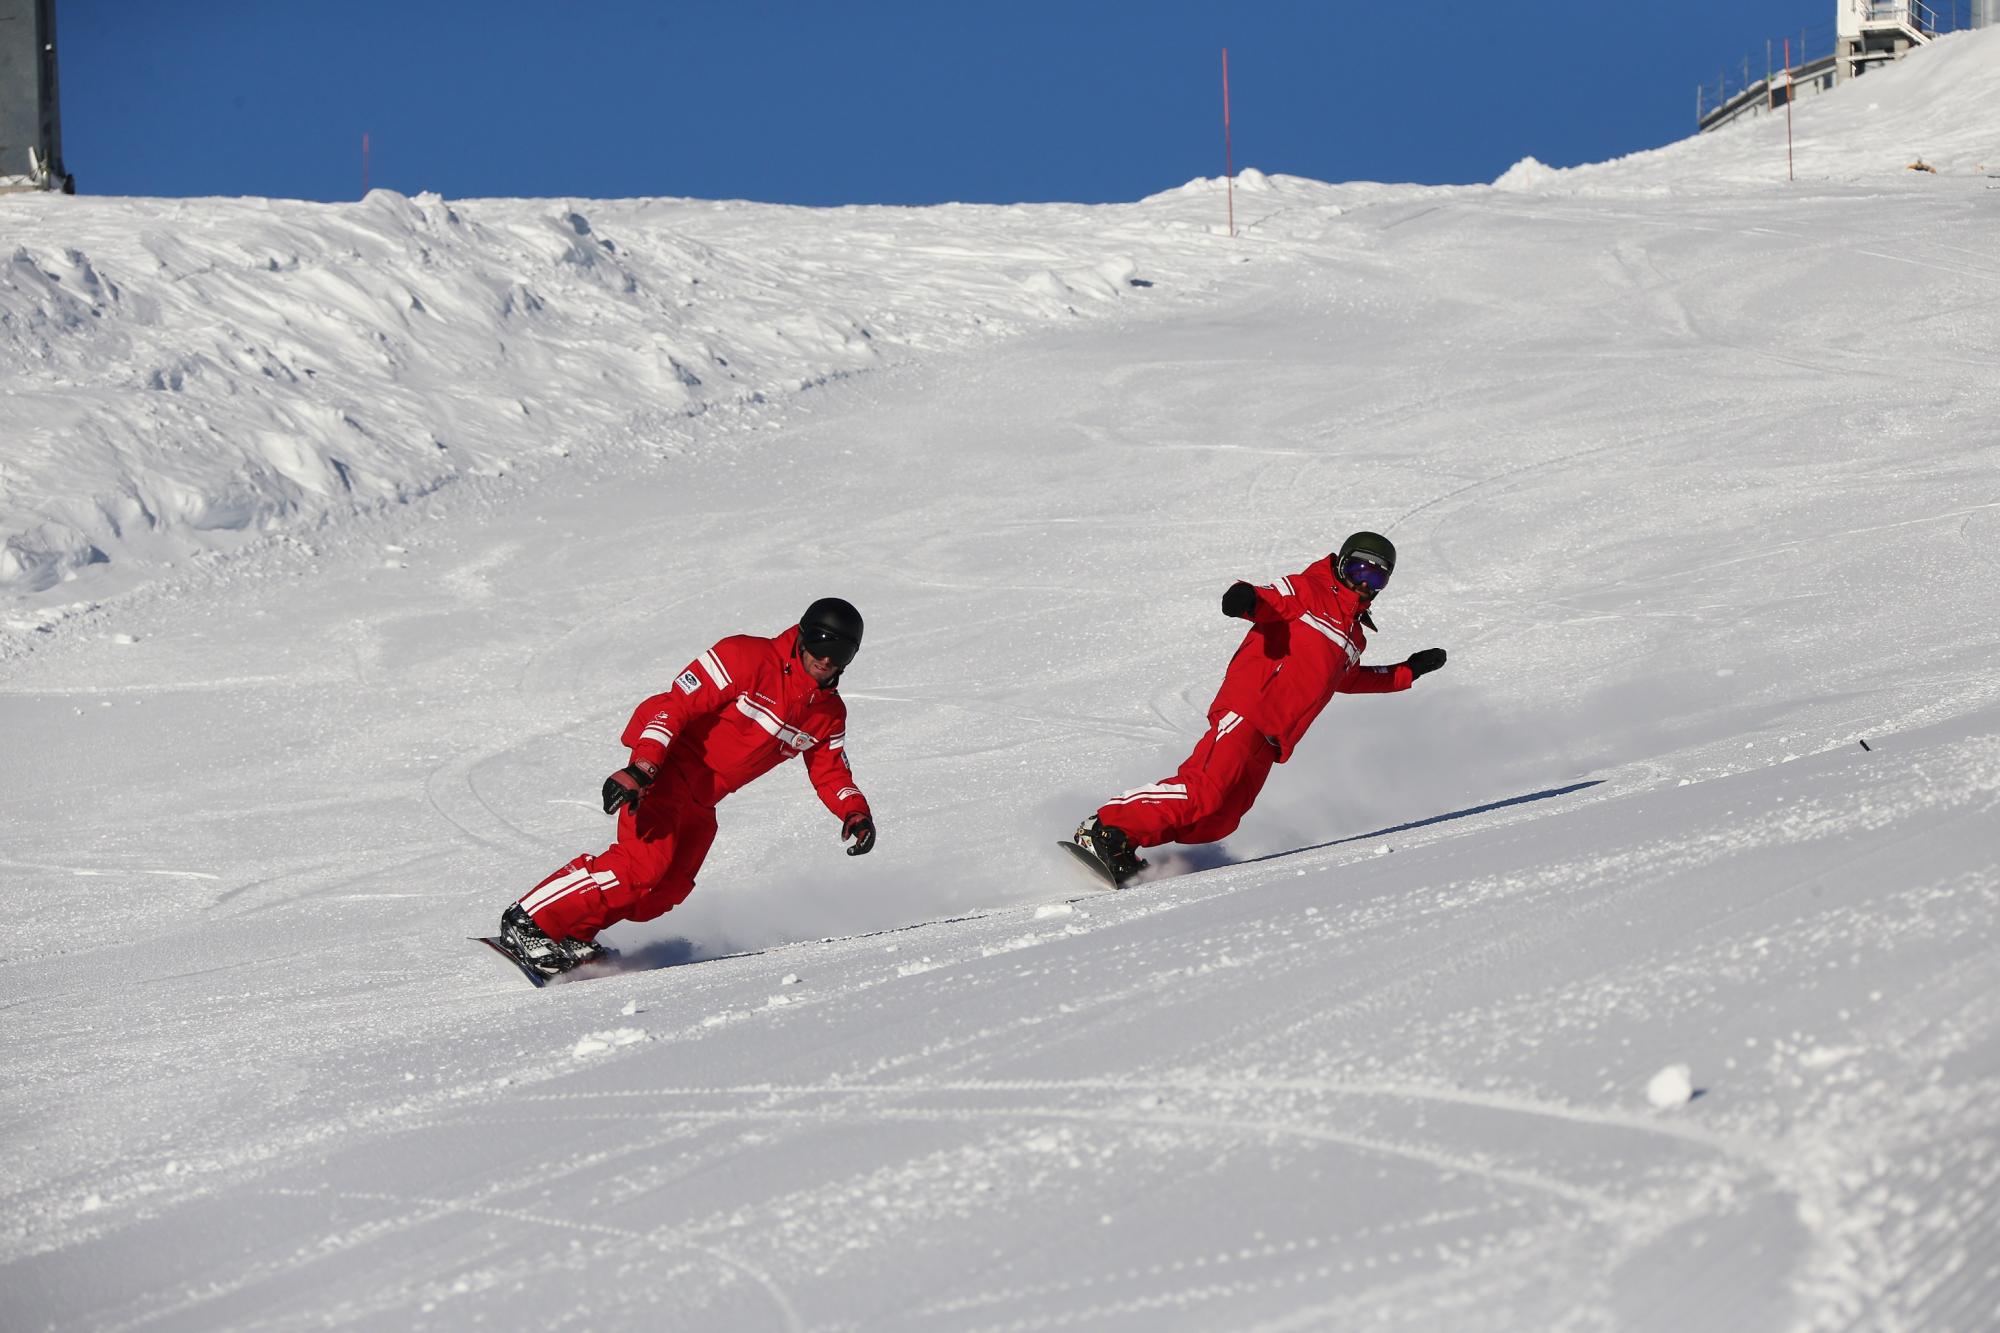 Ecole Suisse de Ski Villars - snowboard